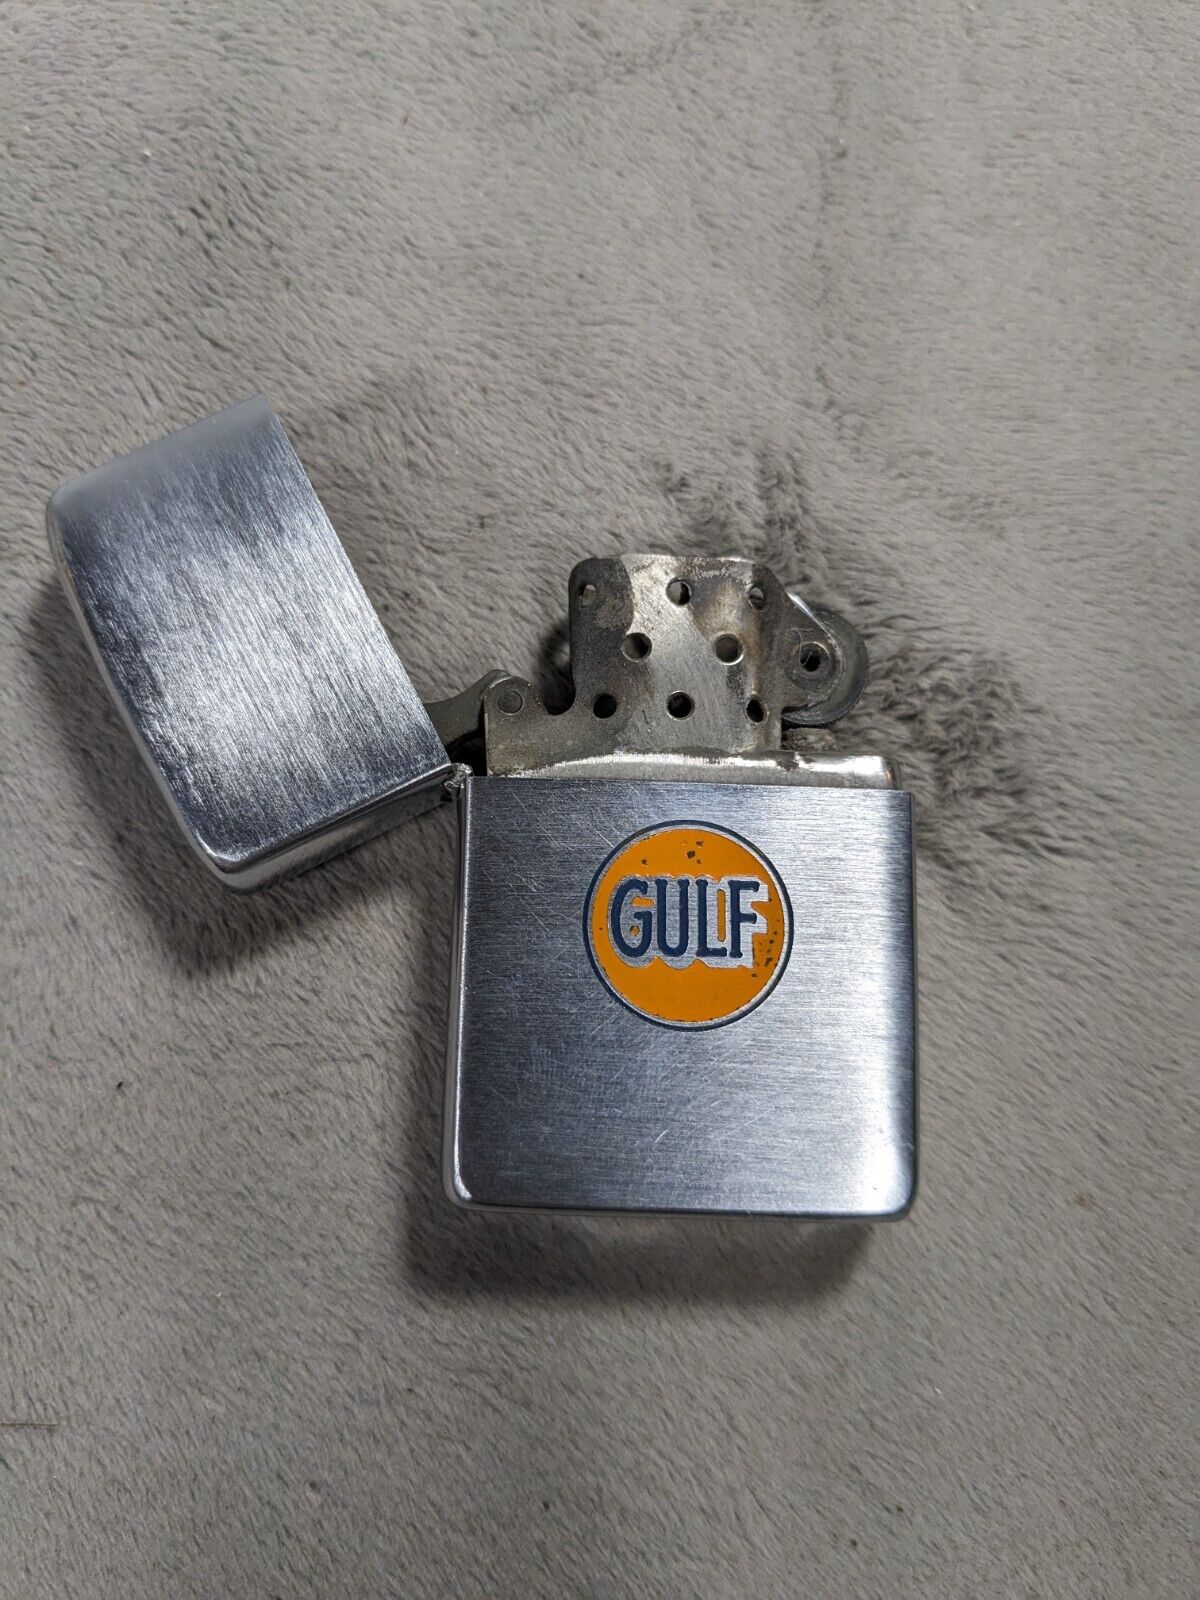 Vintage Gulf Gasoline Cigarette Lighter - Needs Work Done